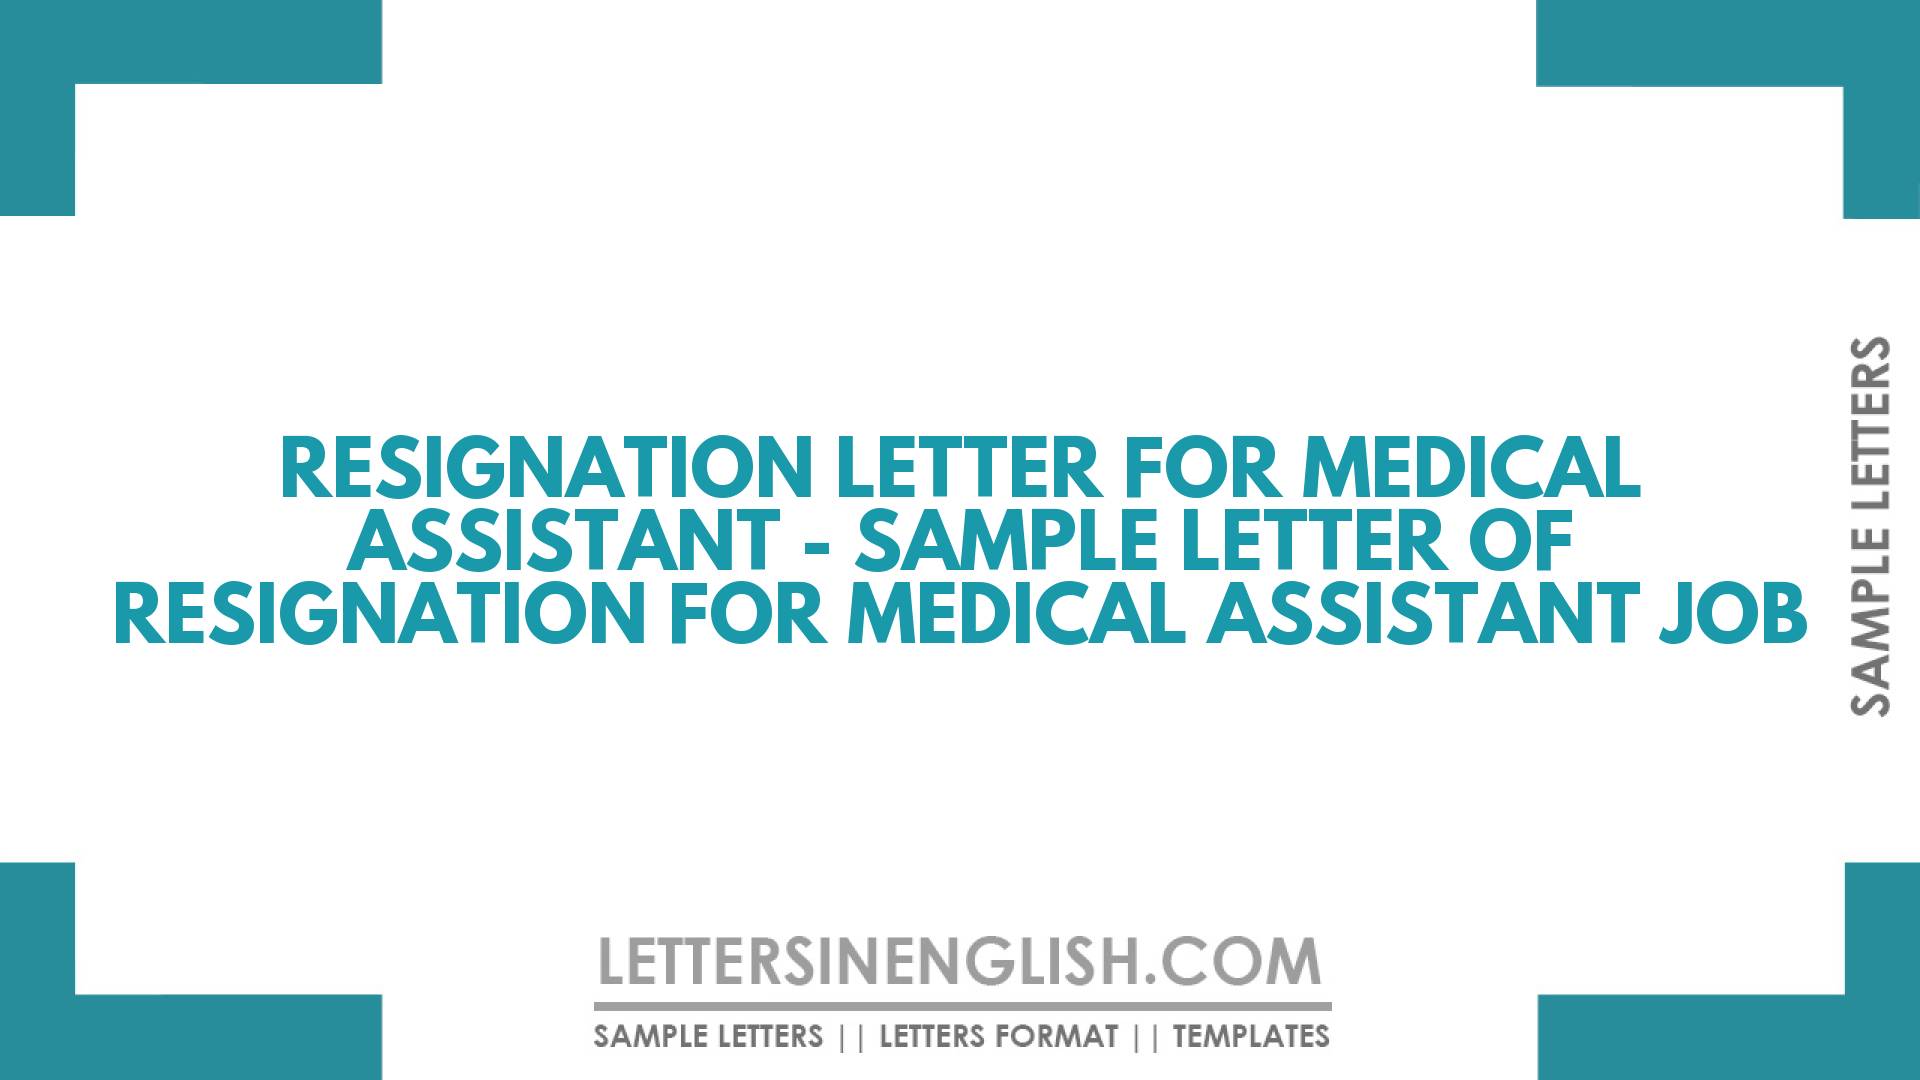 Resignation Letter for Medical Assistant - Sample Letter of Resignation ...